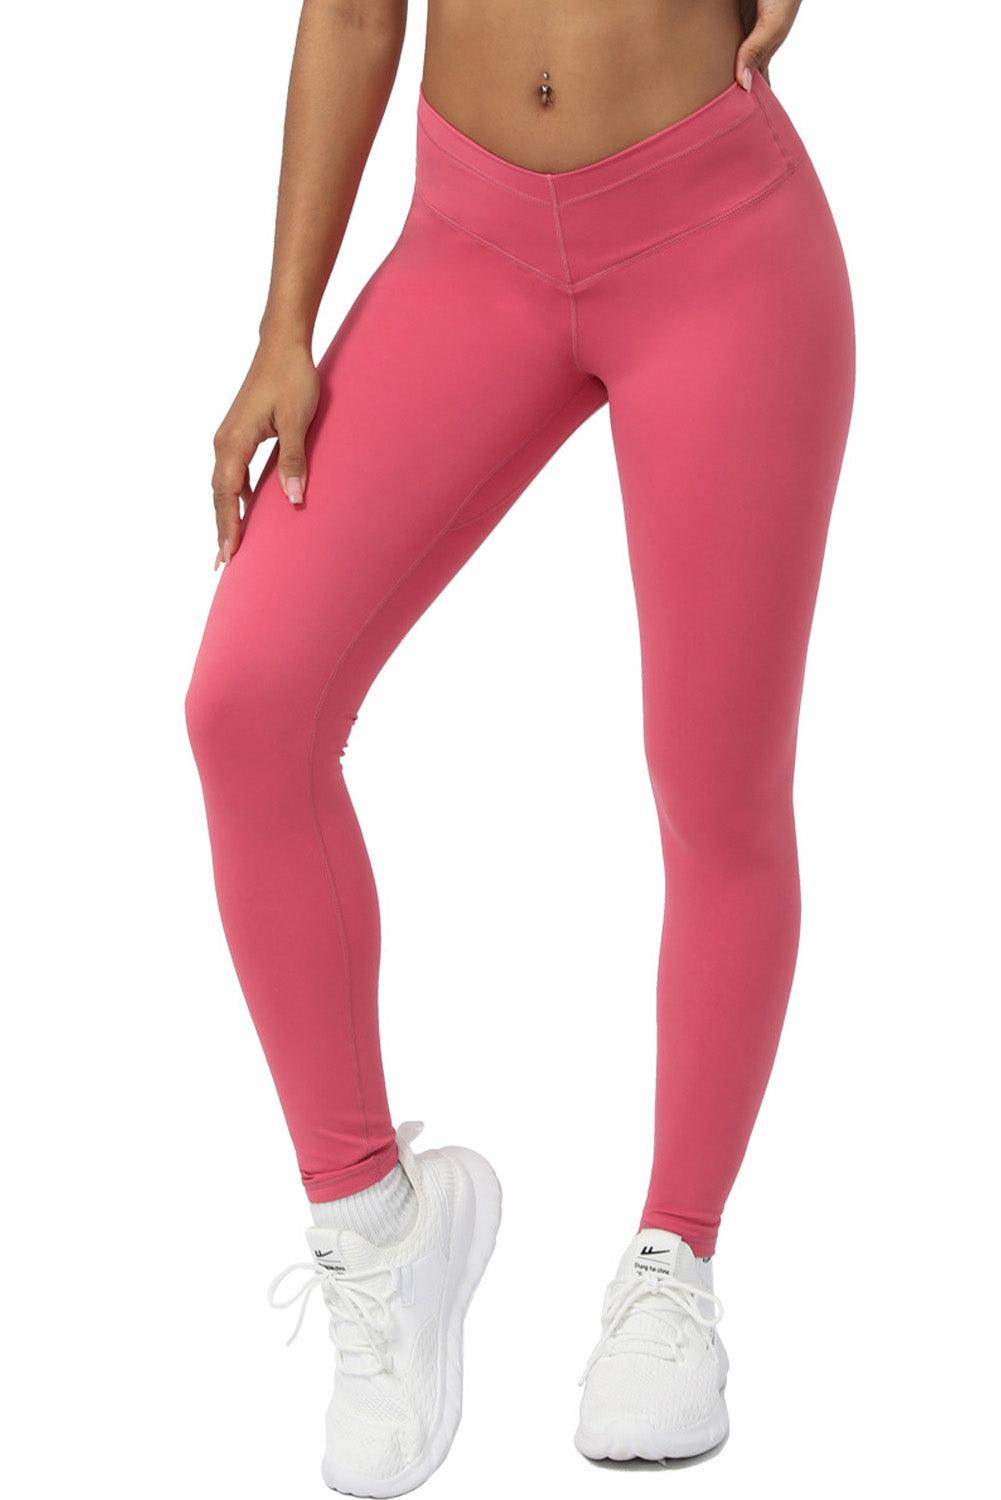 Strawberry Pink Seam Detail V-shape Dipped Waist Fitness Leggings - L & M Kee, LLC